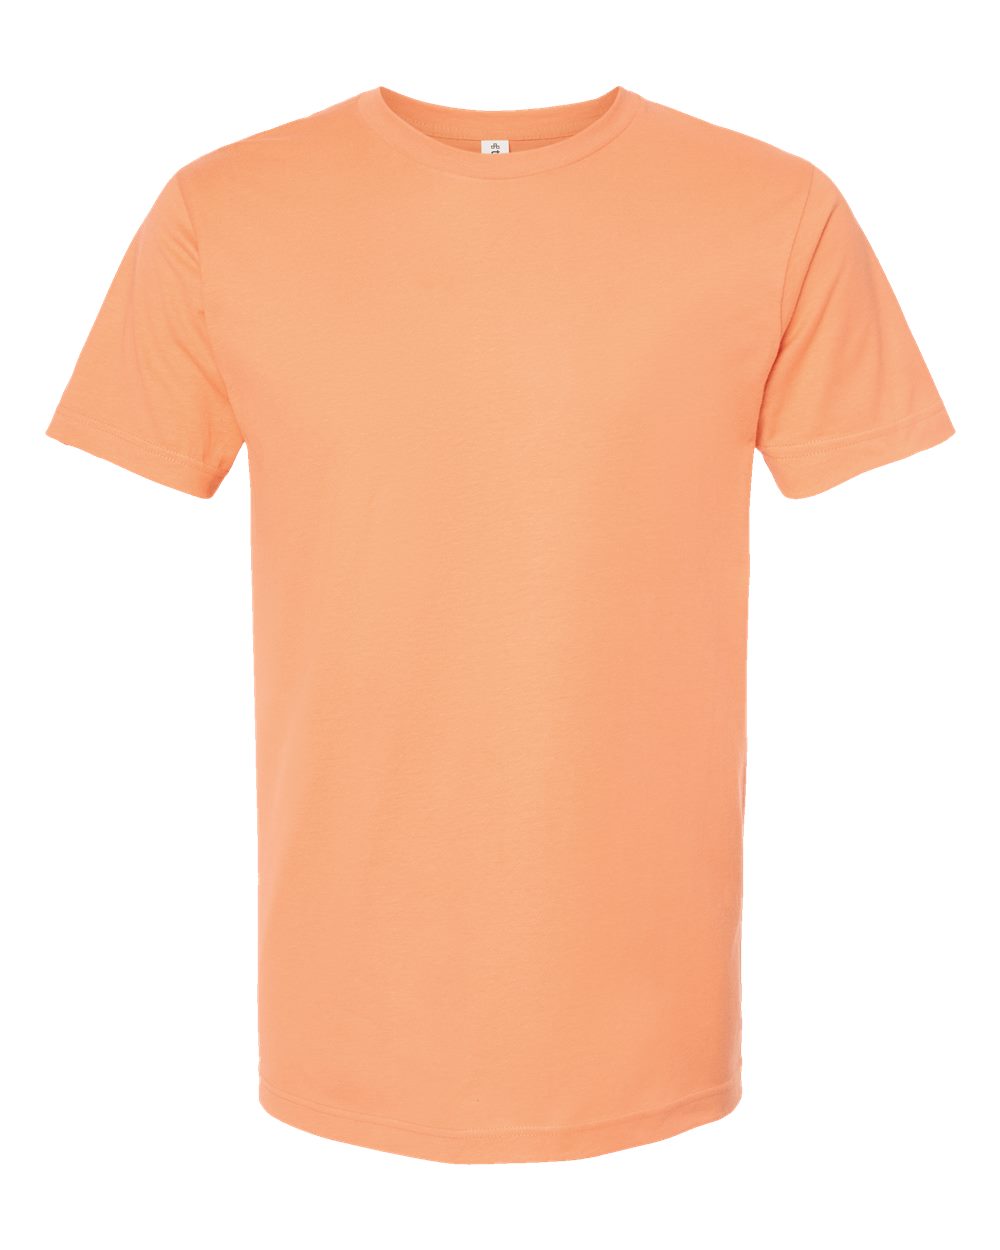 Tultex 202 Adult Shirt - XS-Medium